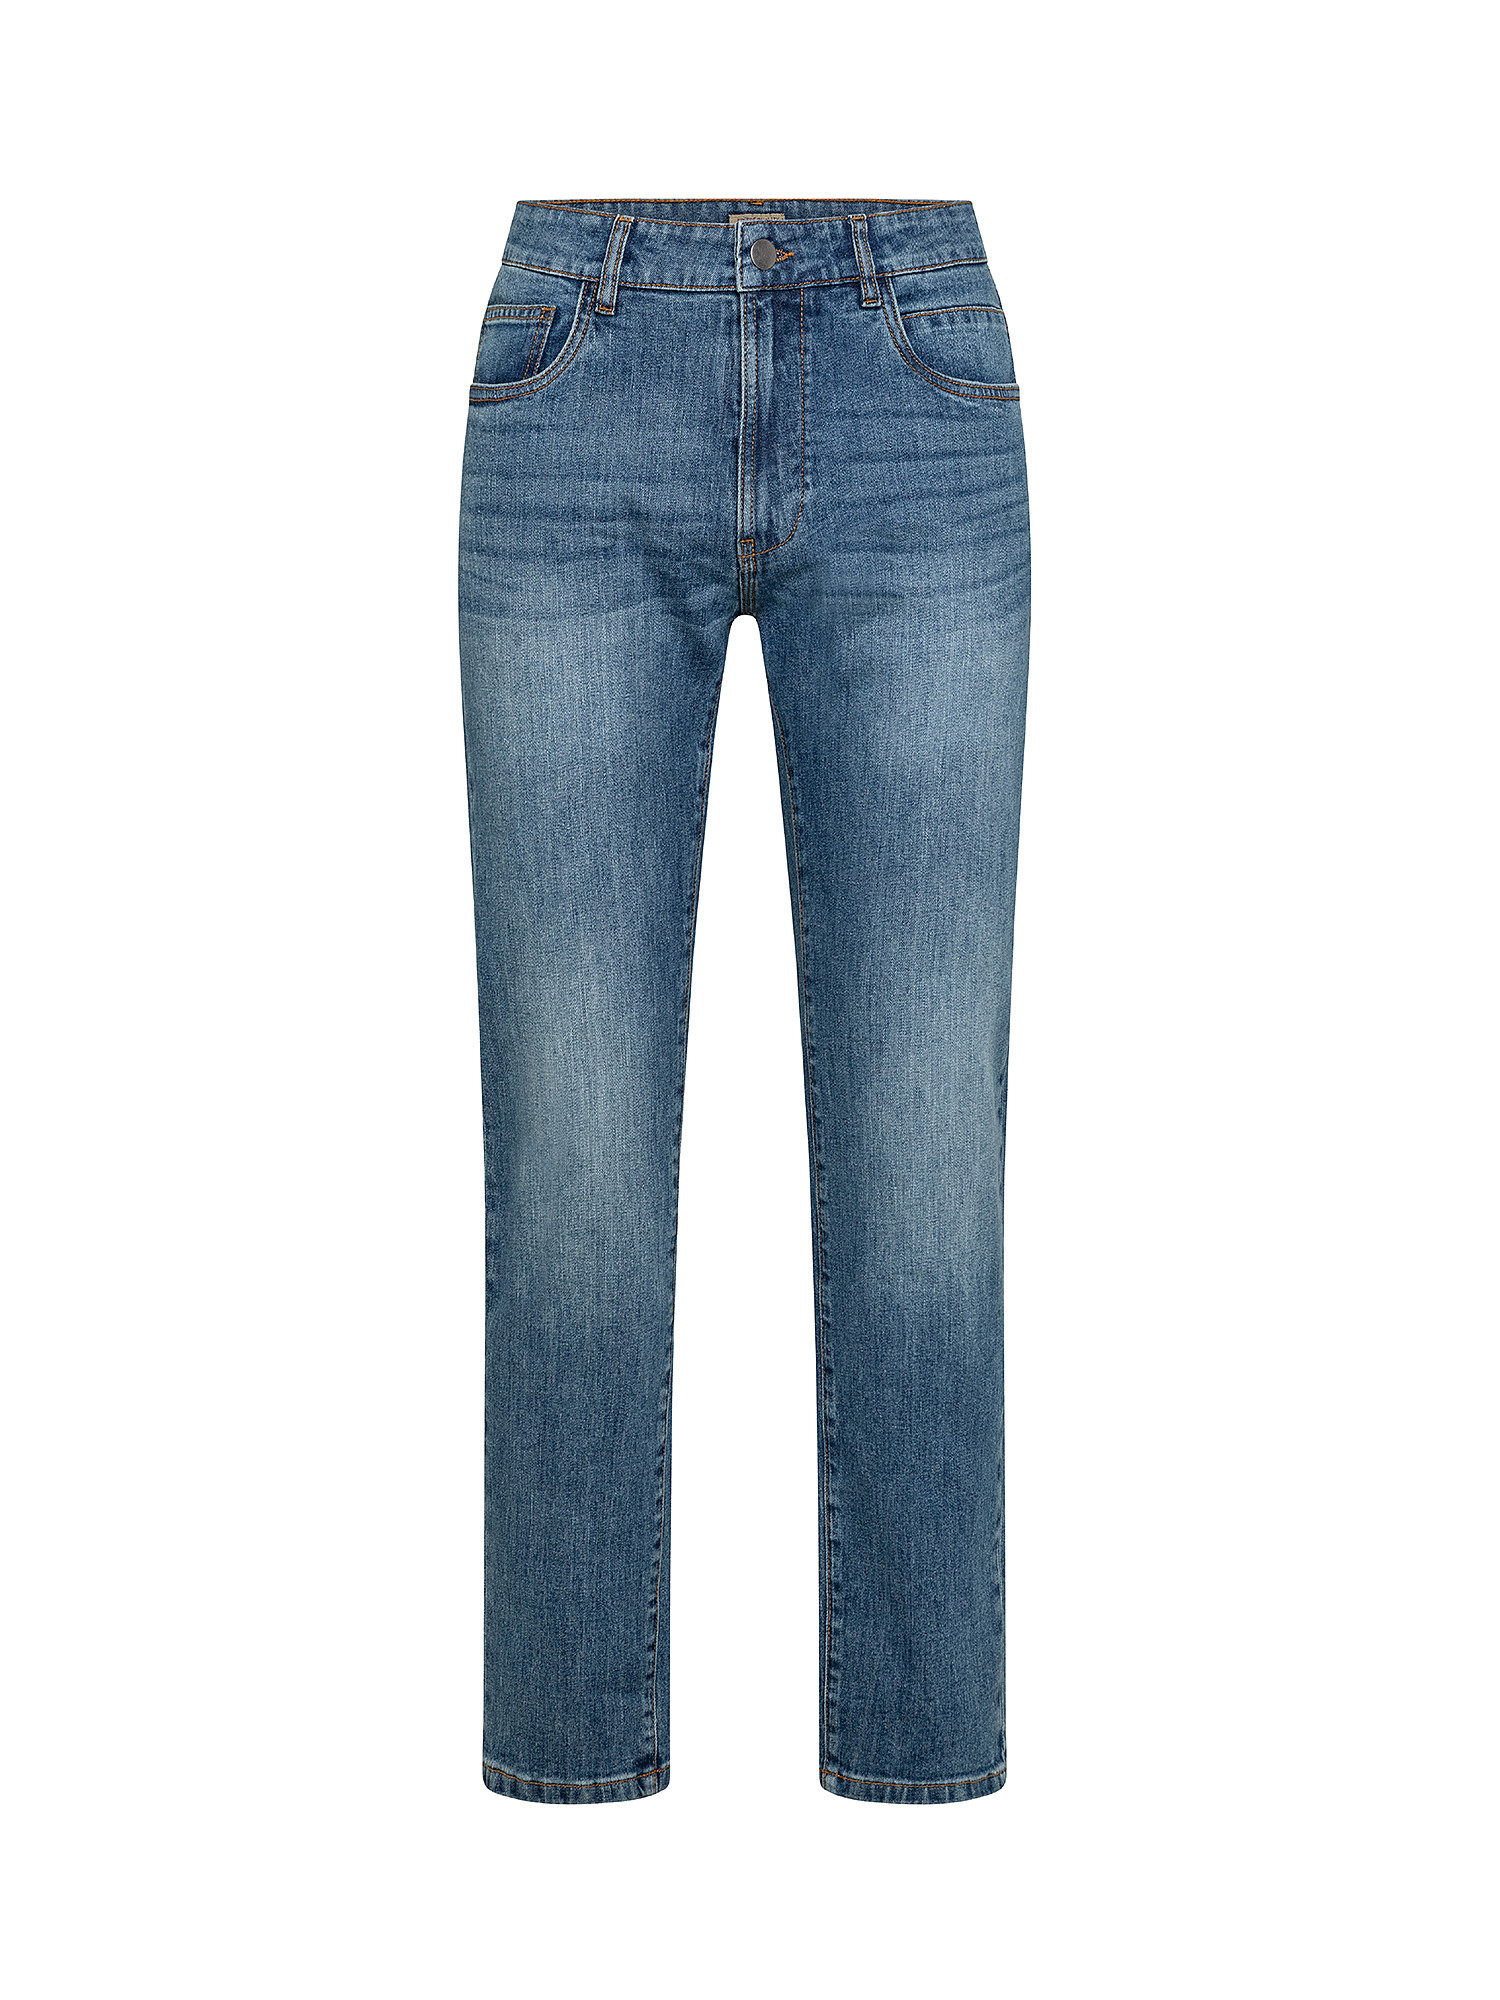 Jeans cinque tasche, Blu, large image number 0